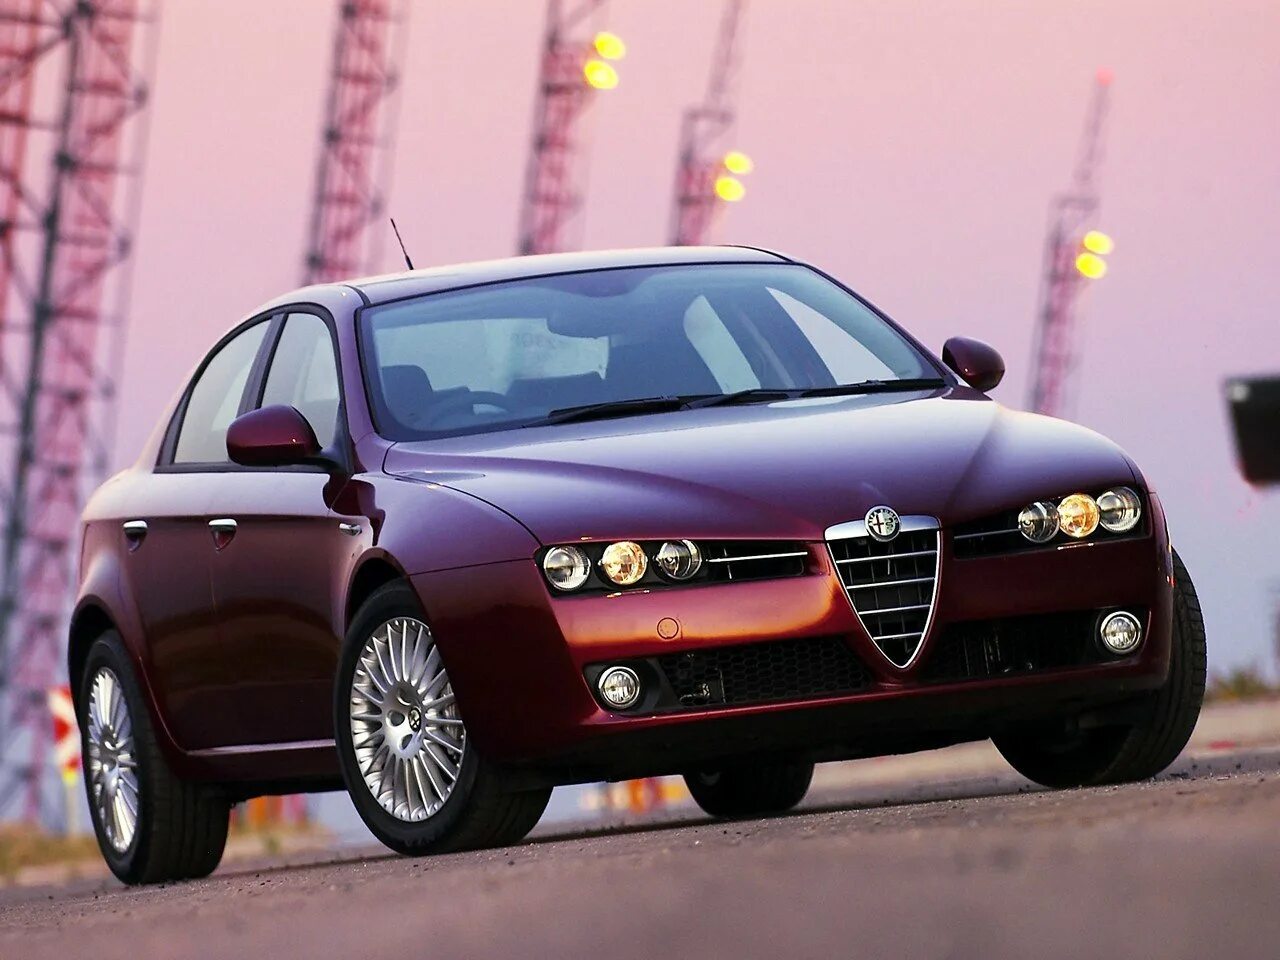 1.6 альфа ромео. Alfa Romeo. Alfa Romeo 159 3.2. Автомобиль Альфа Ромео 159. Alfa Romeo 159, 3.2 JTS.